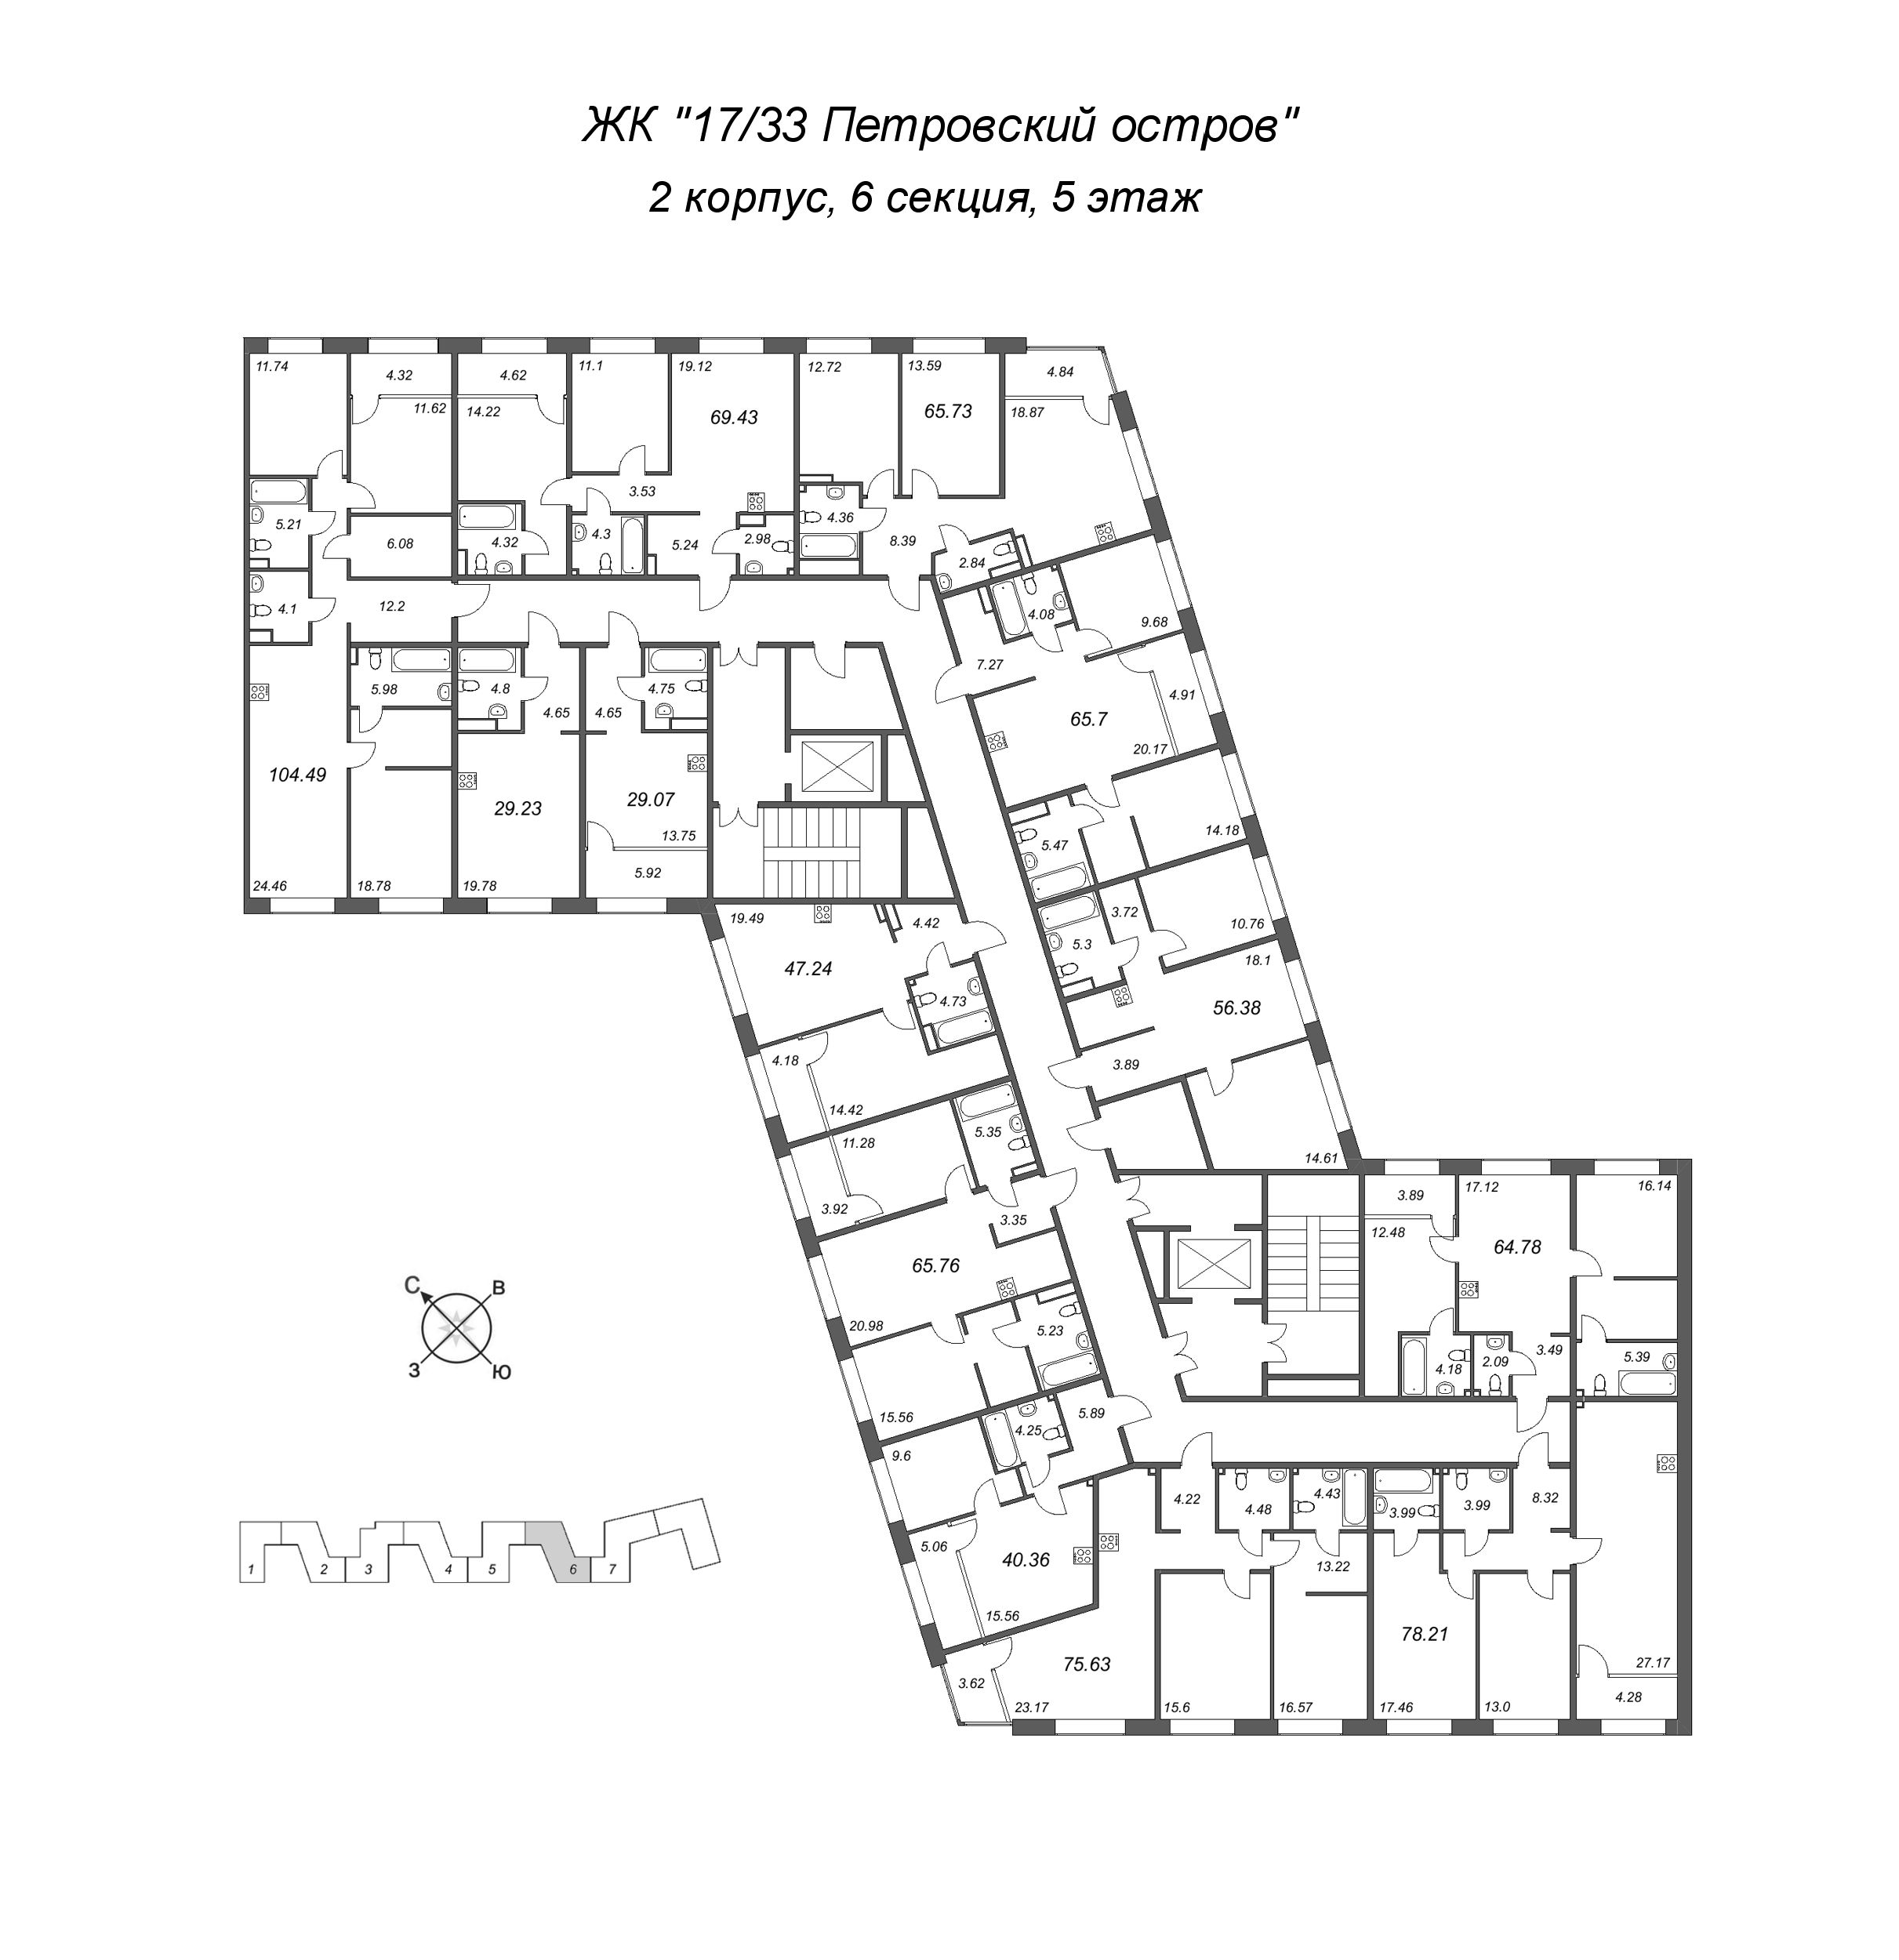 3-комнатная (Евро) квартира, 69.43 м² - планировка этажа